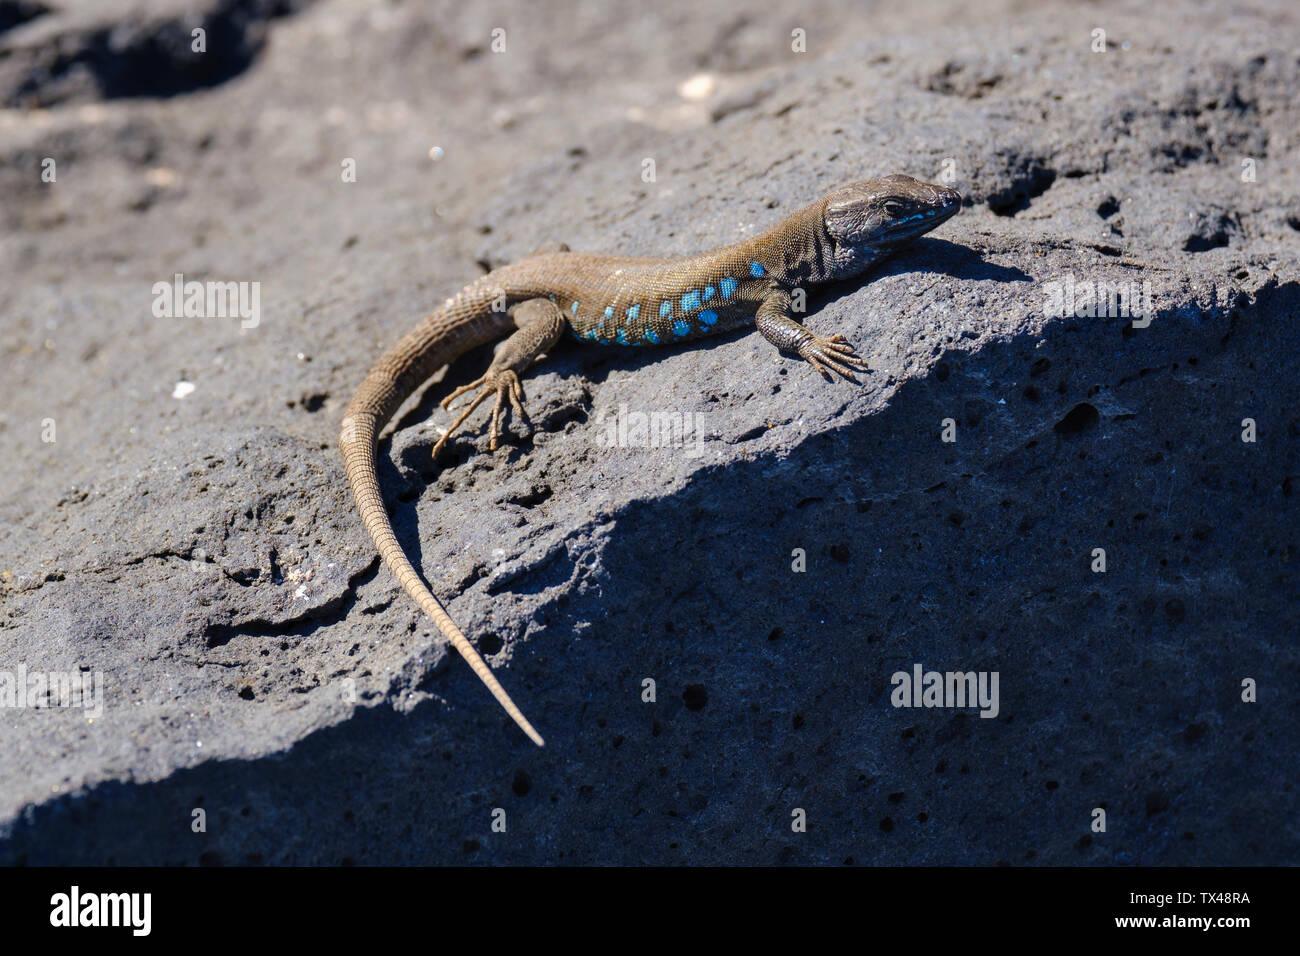 Spain, Canary Islands, Lanzarote, Atlantic lizard, Gallotia atlantica Stock Photo